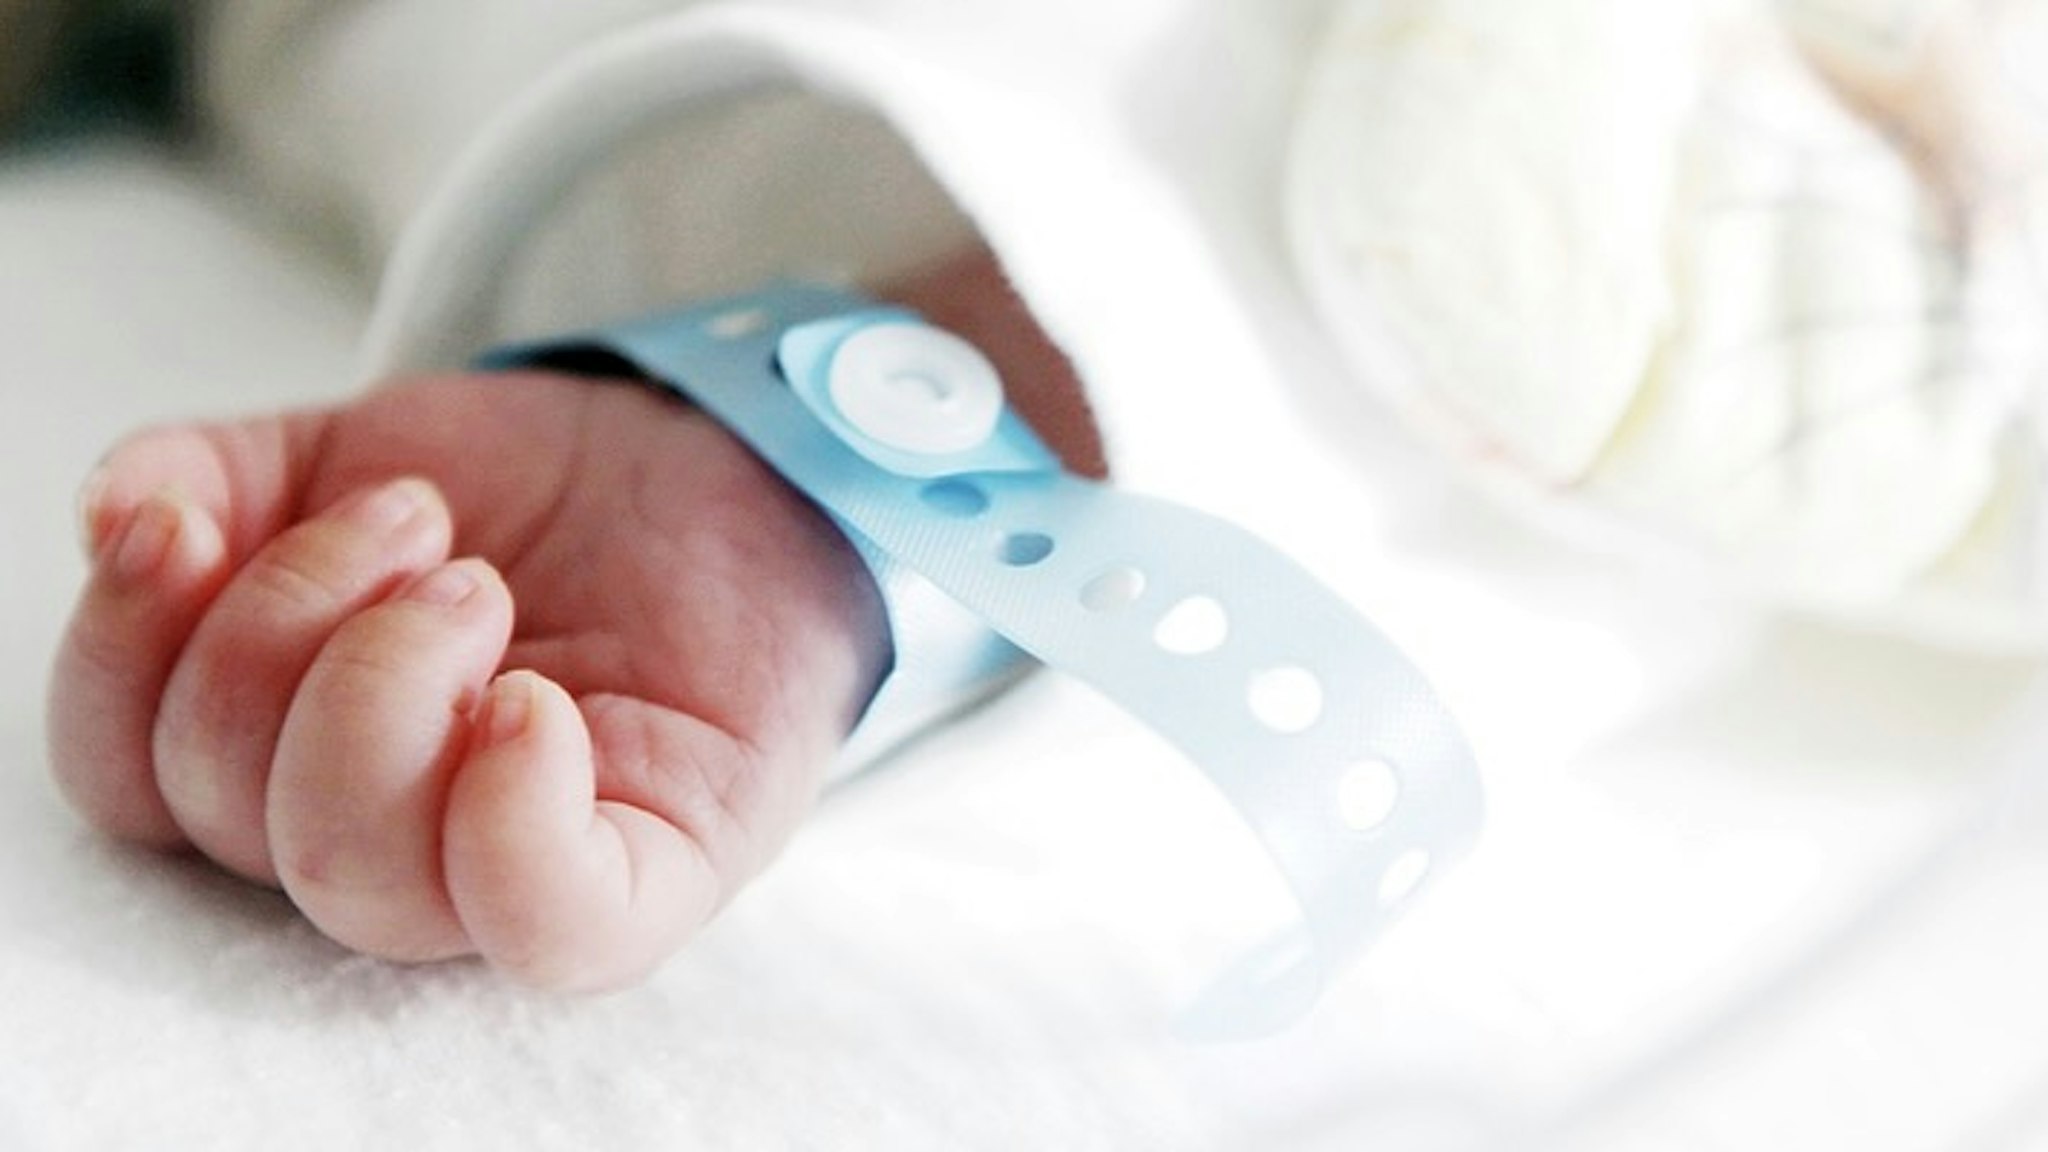 Cropped Hand Of Newborn Baby With Name Tag - stock photo Vladimir Nenov / EyeEm via Getty Images